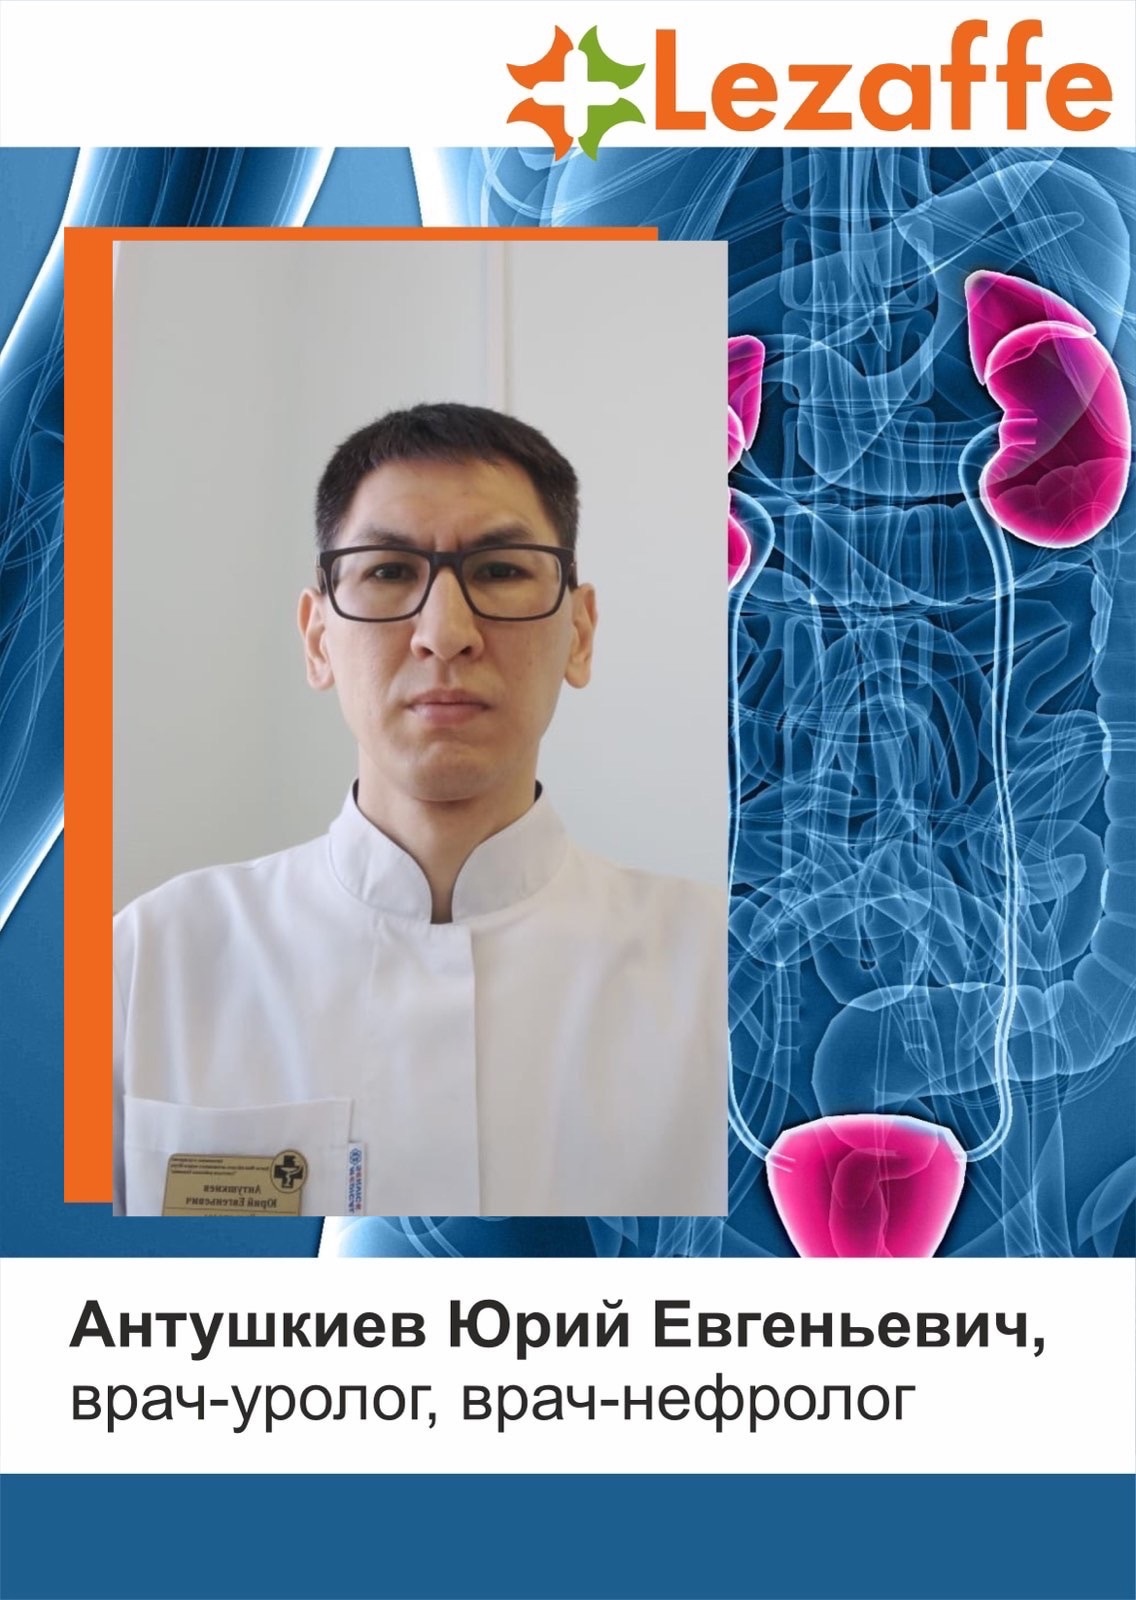 Антушкиев Юрий Евгеньевич - врач-уролог, врач-нефролог в клинике Lezaffe г. Нягань